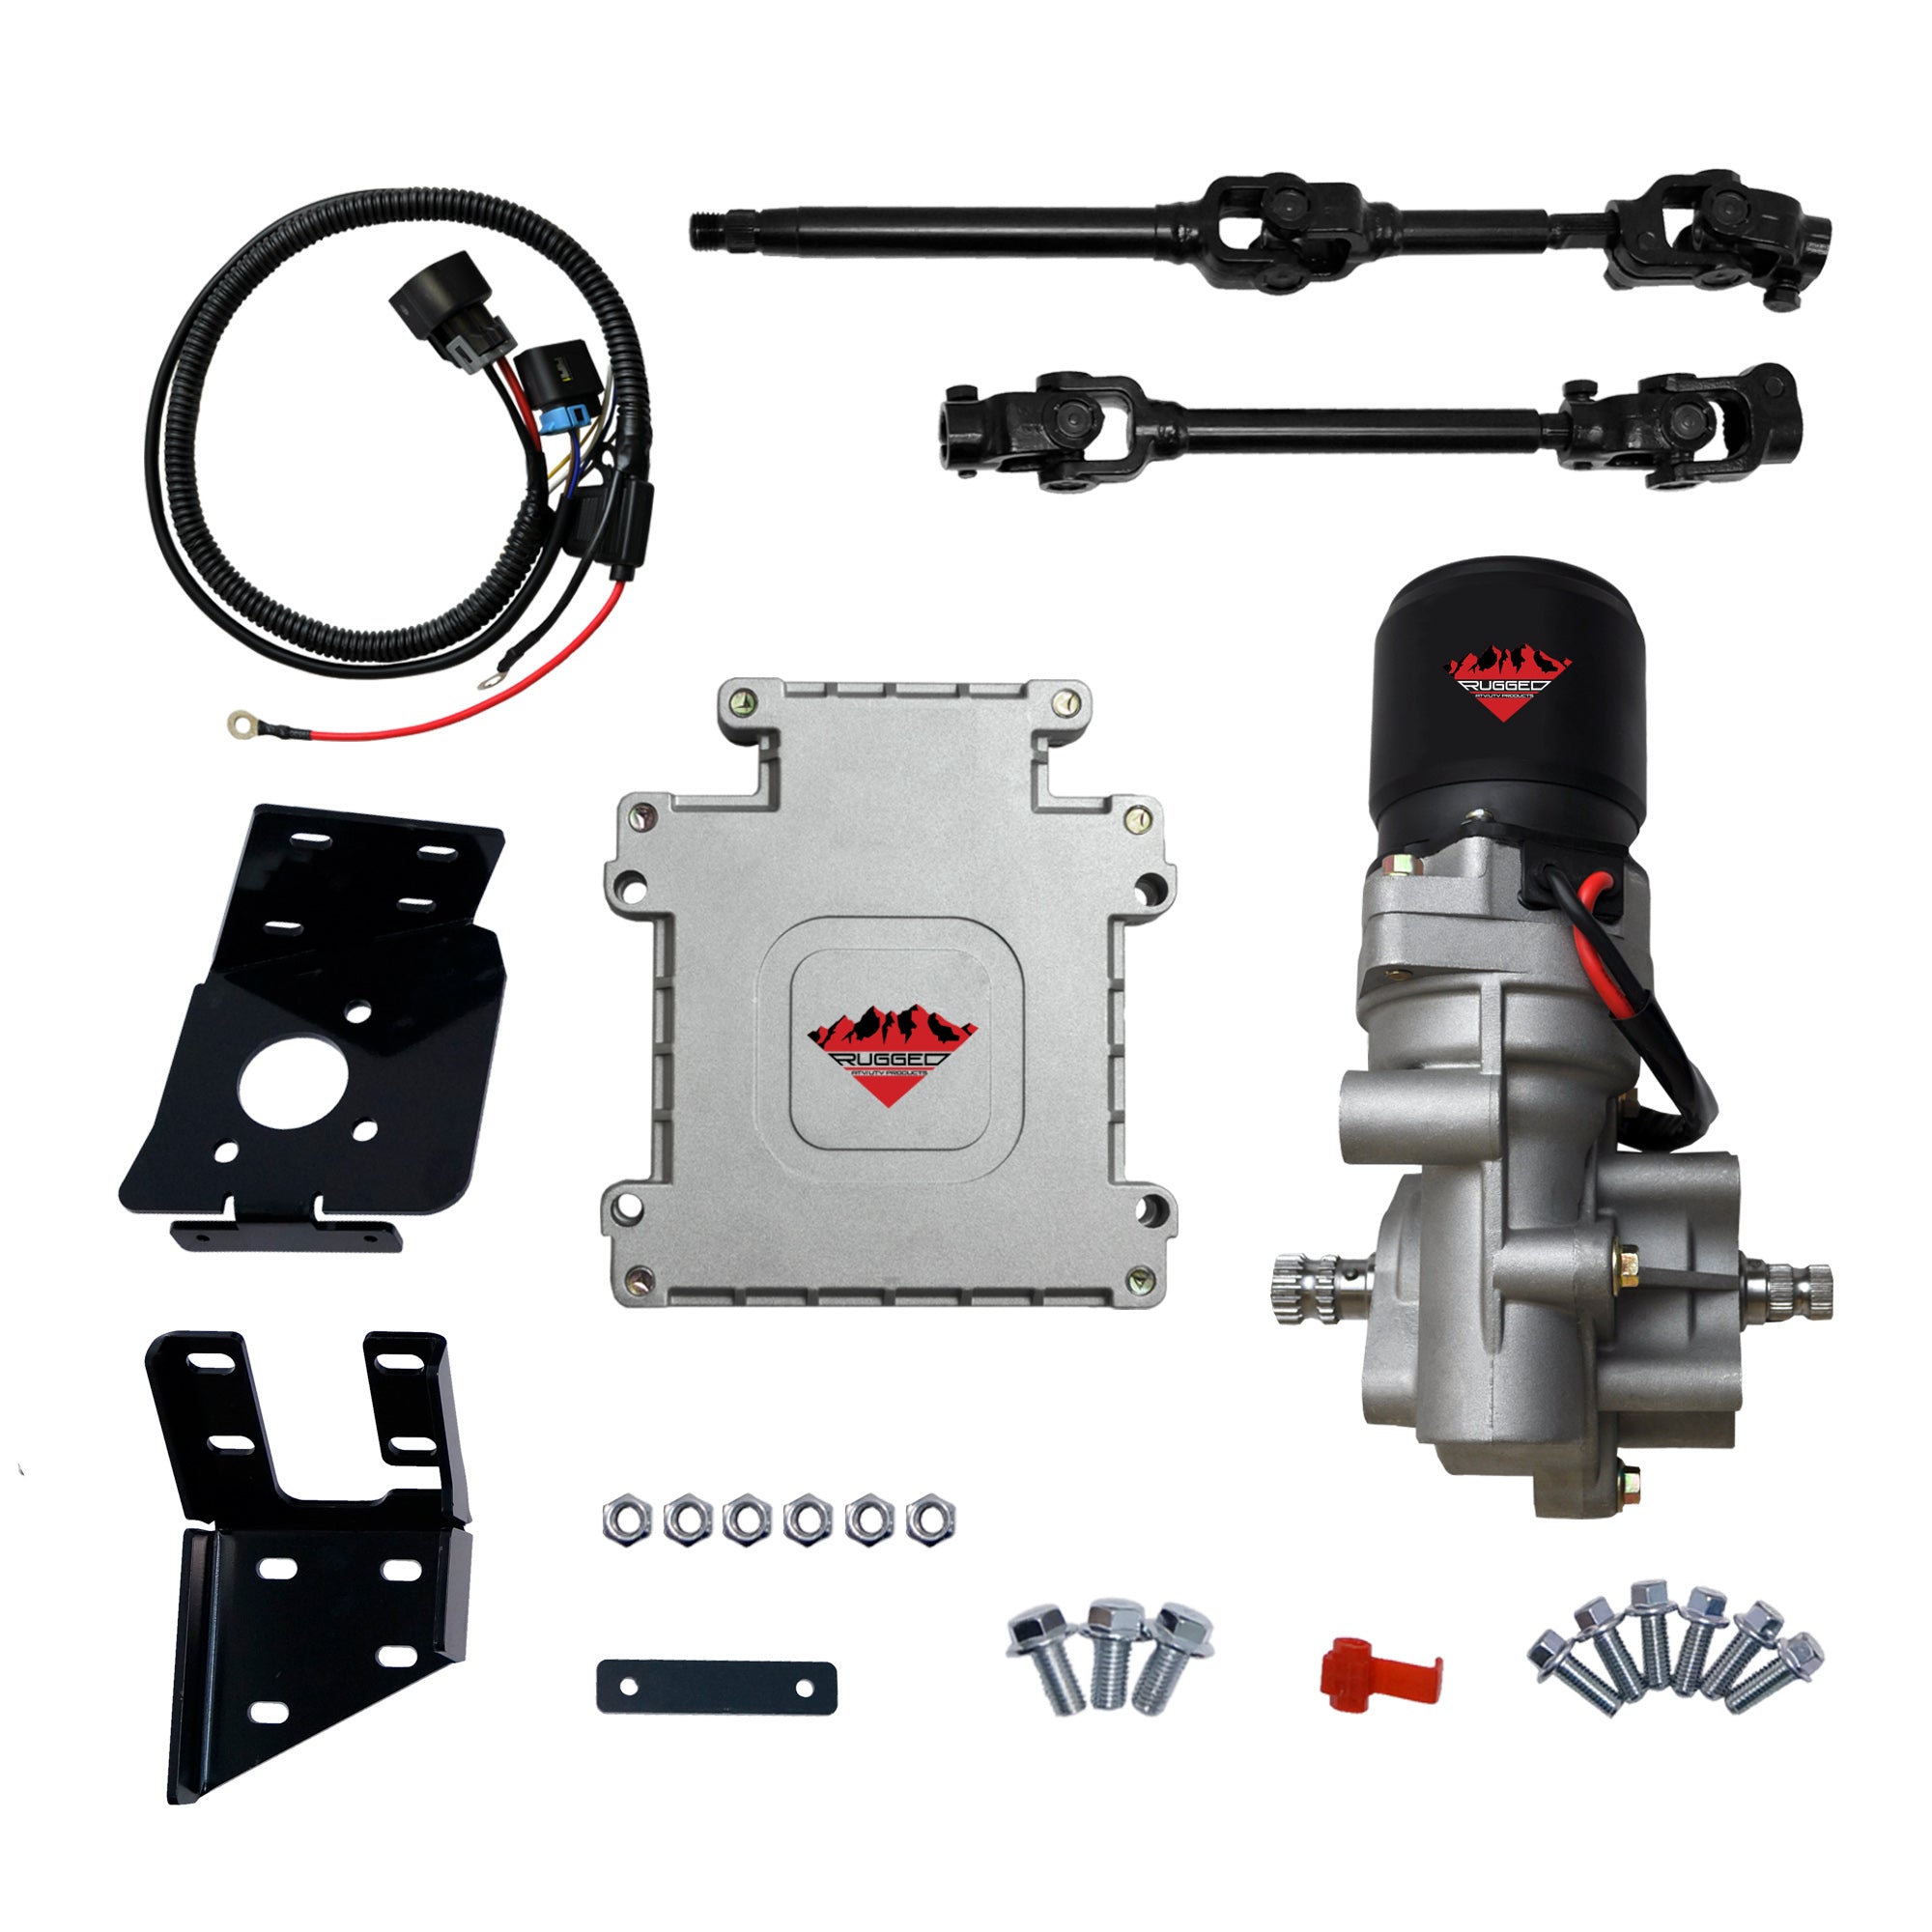 Electric Power Steering Kit for Polaris RZR 170 